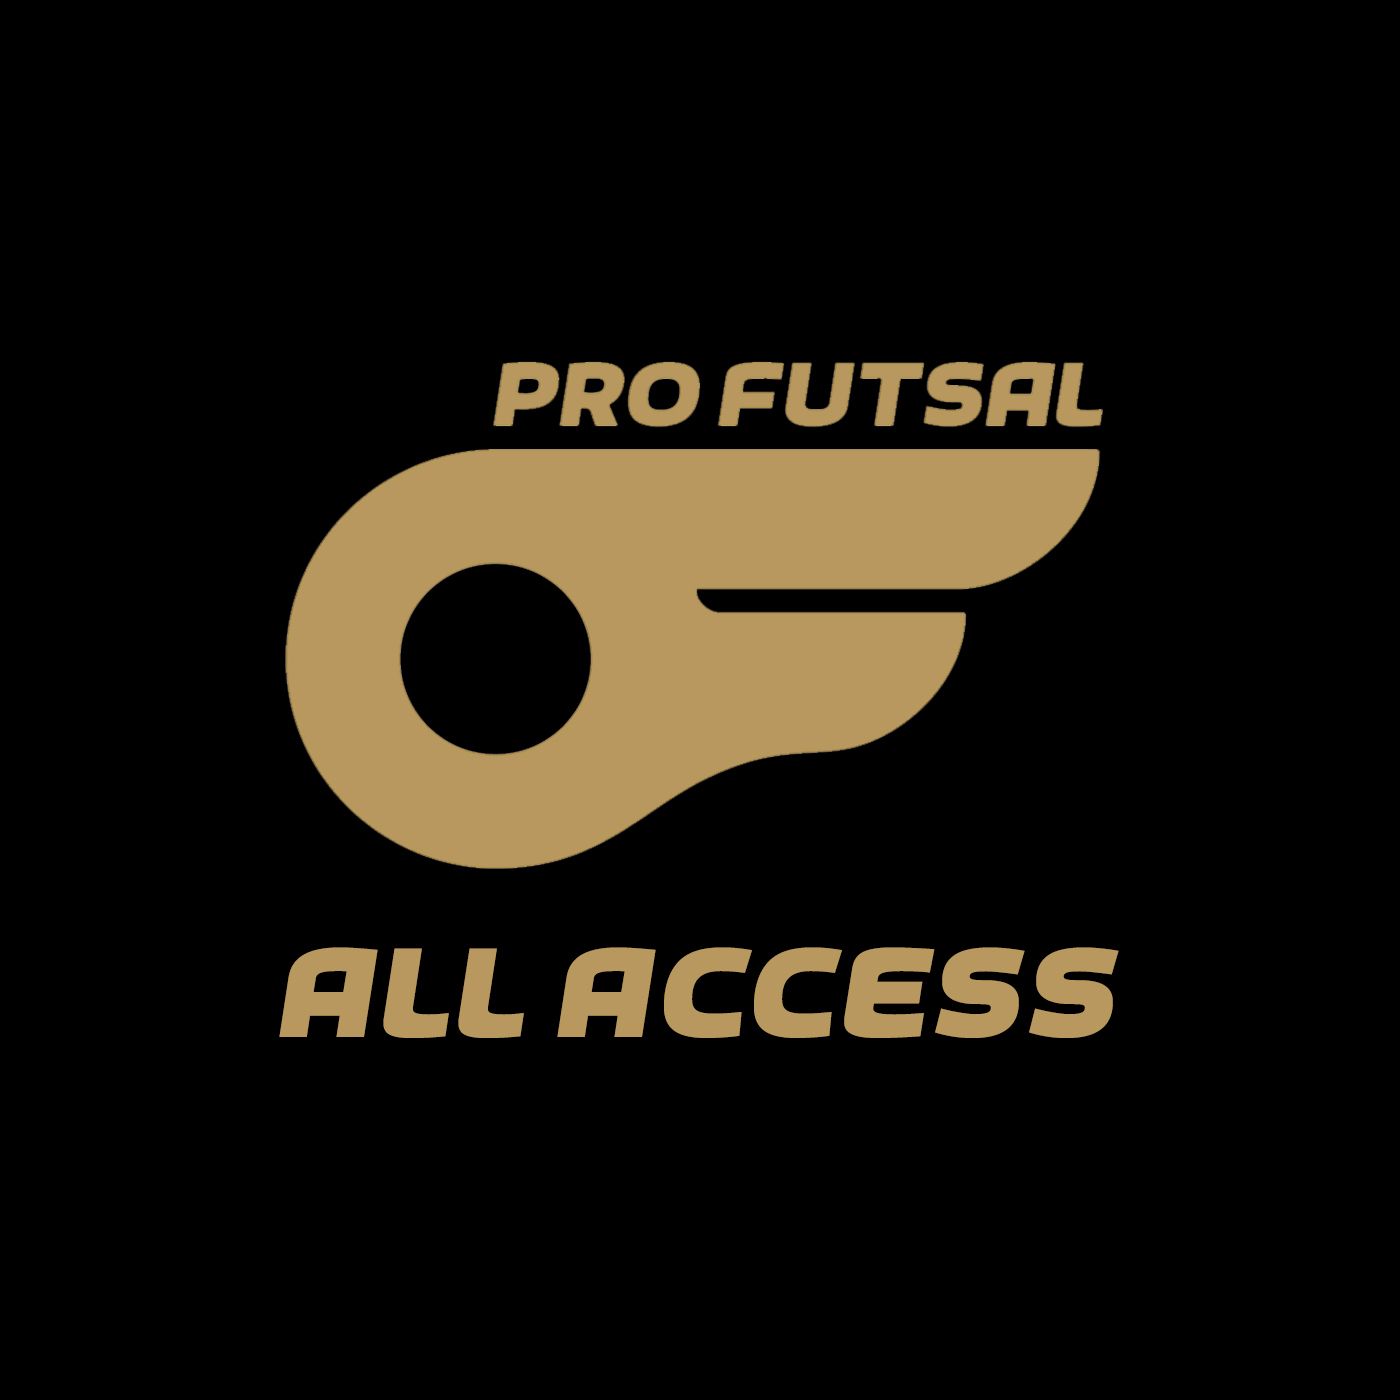 Pro Futsal All Access